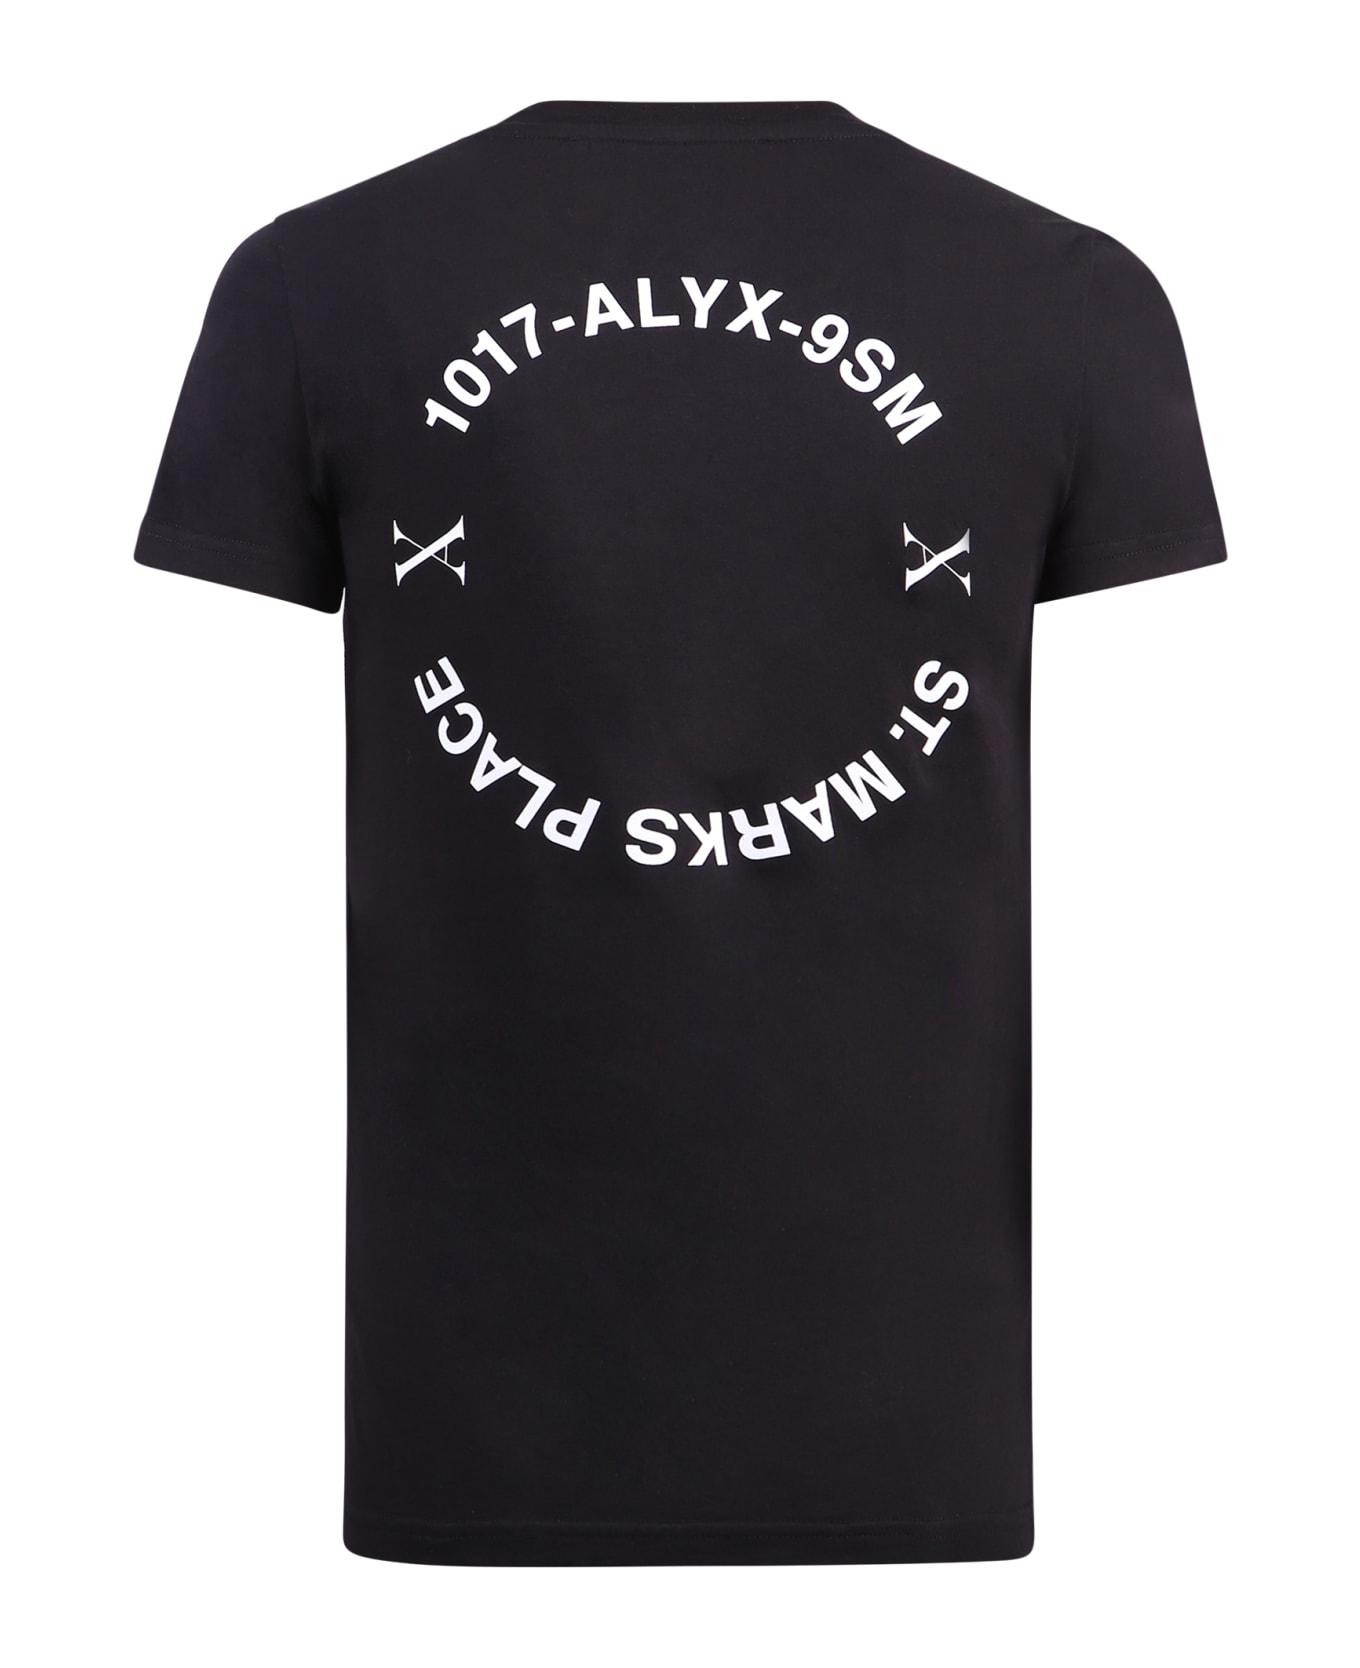 1017 ALYX 9SM Branded T-shirt - Black